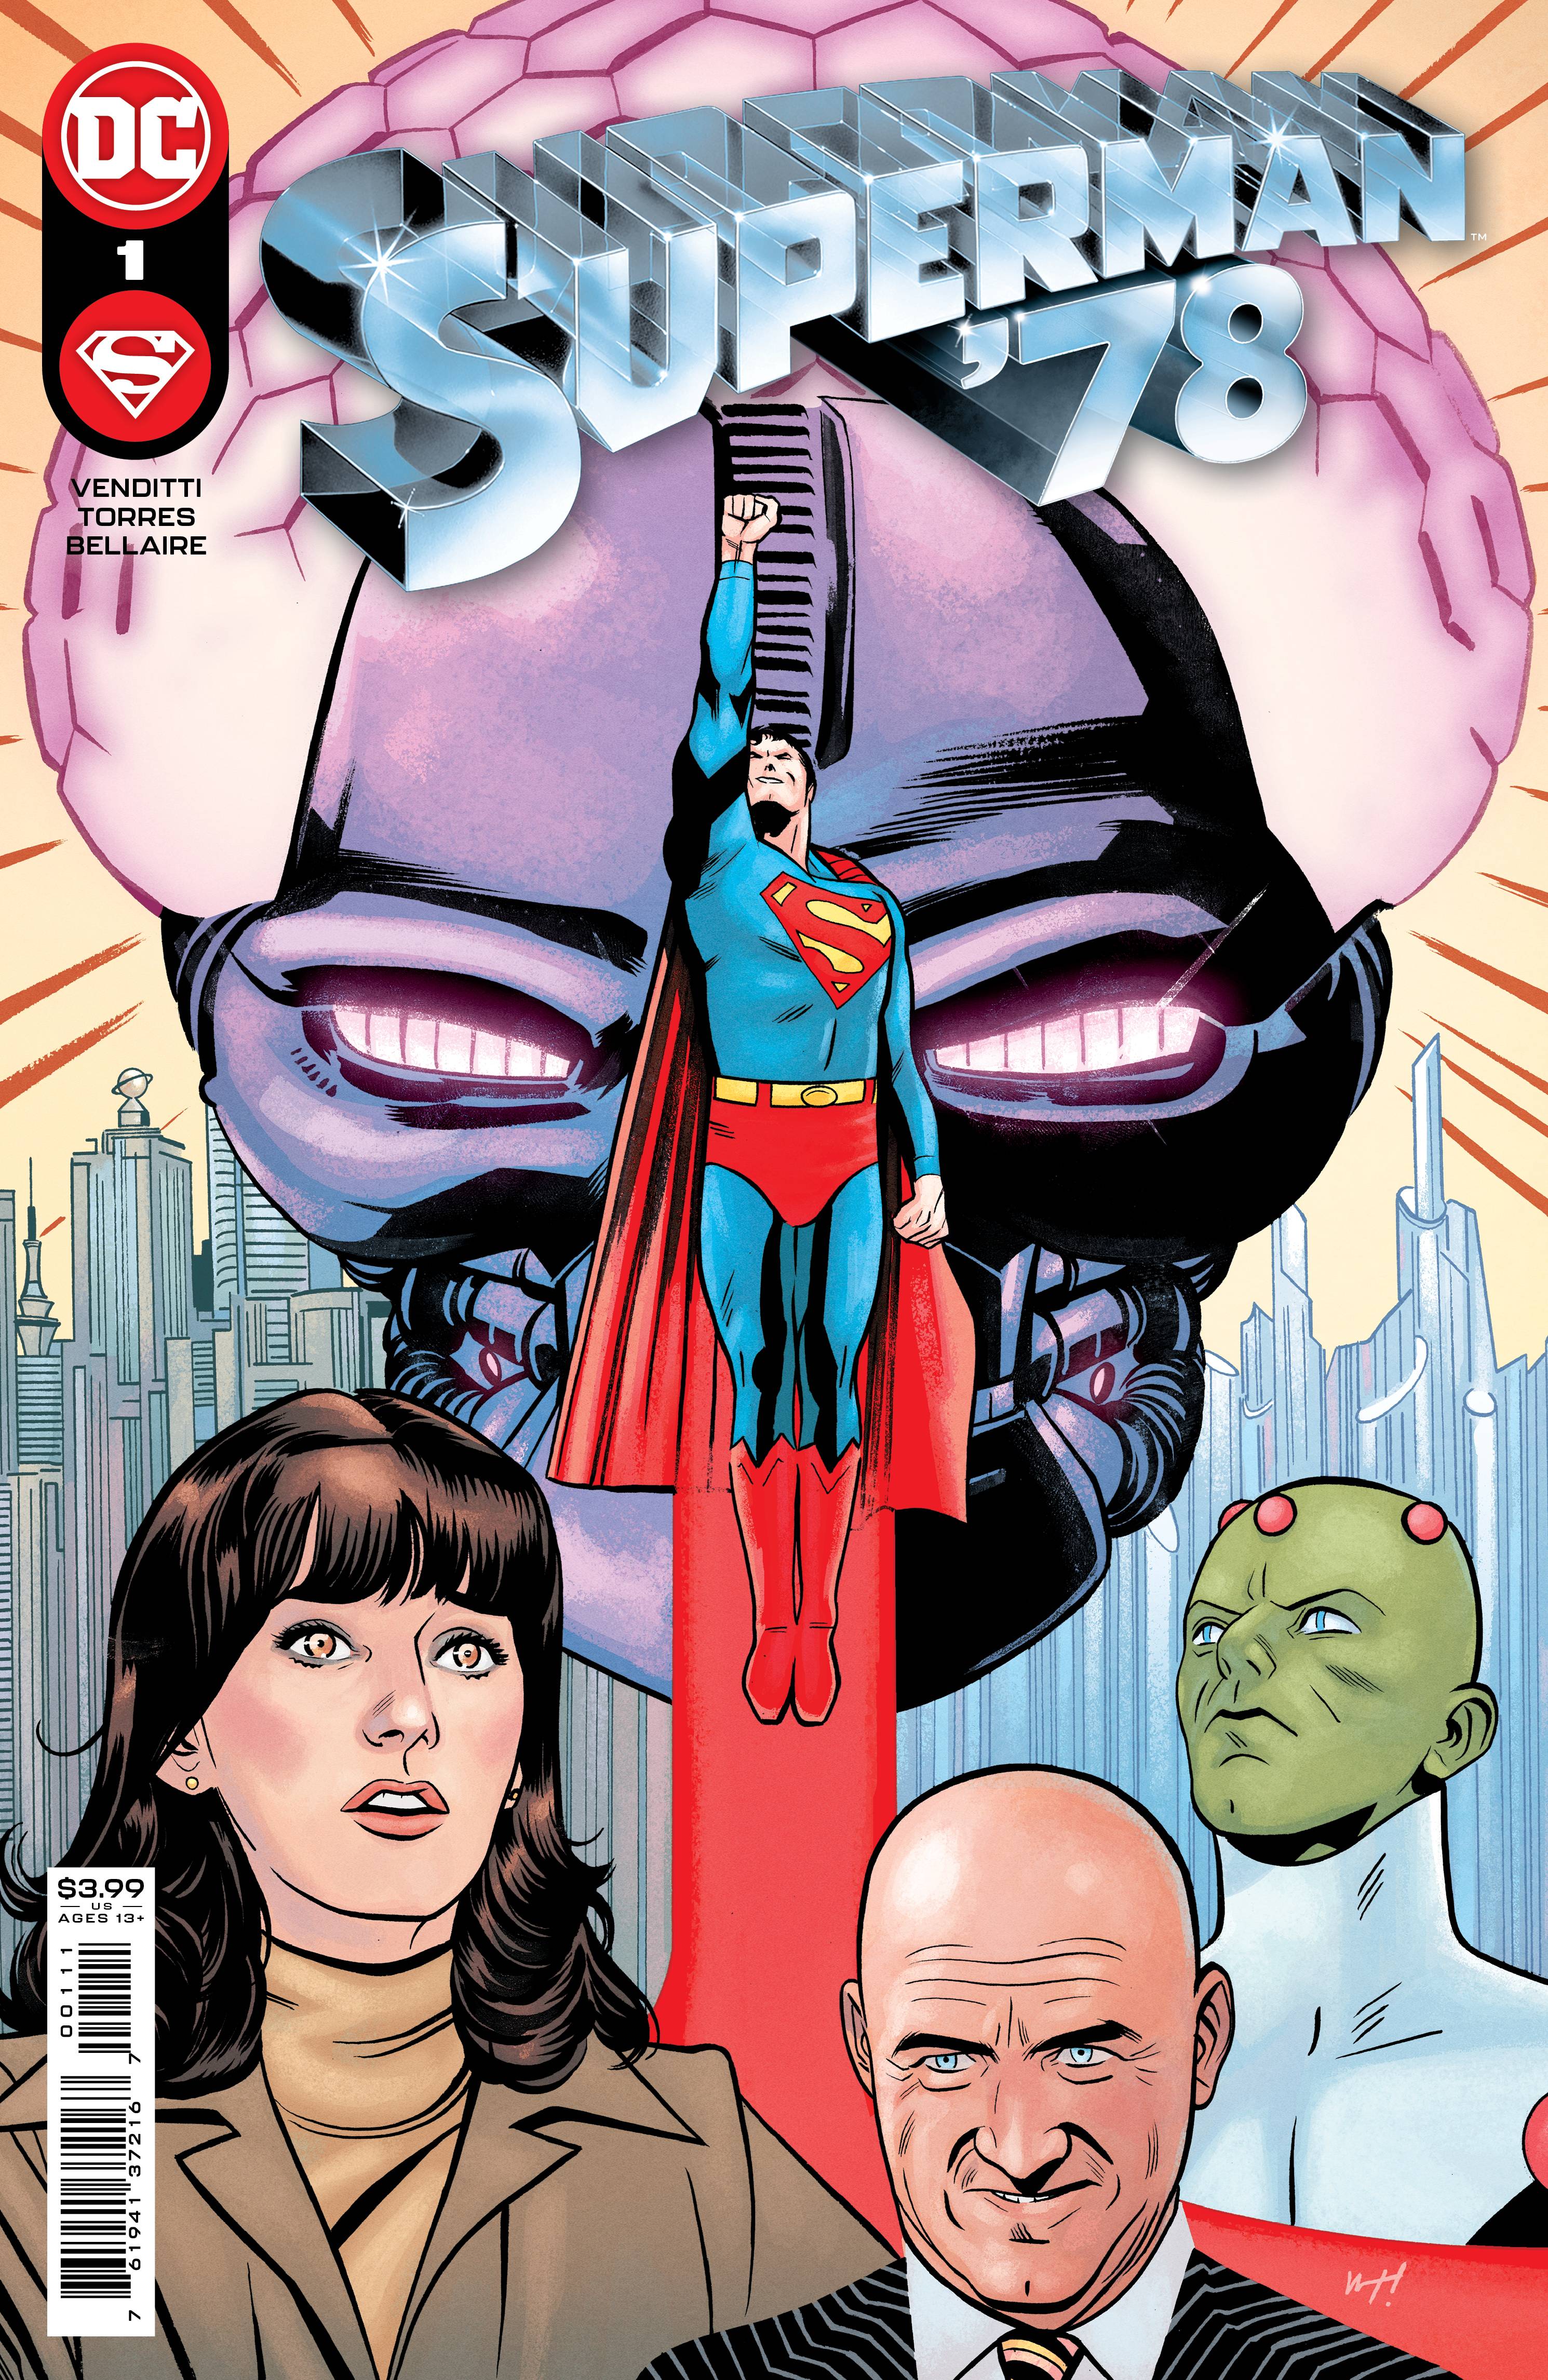 SUPERMAN 78 #1 CVR A